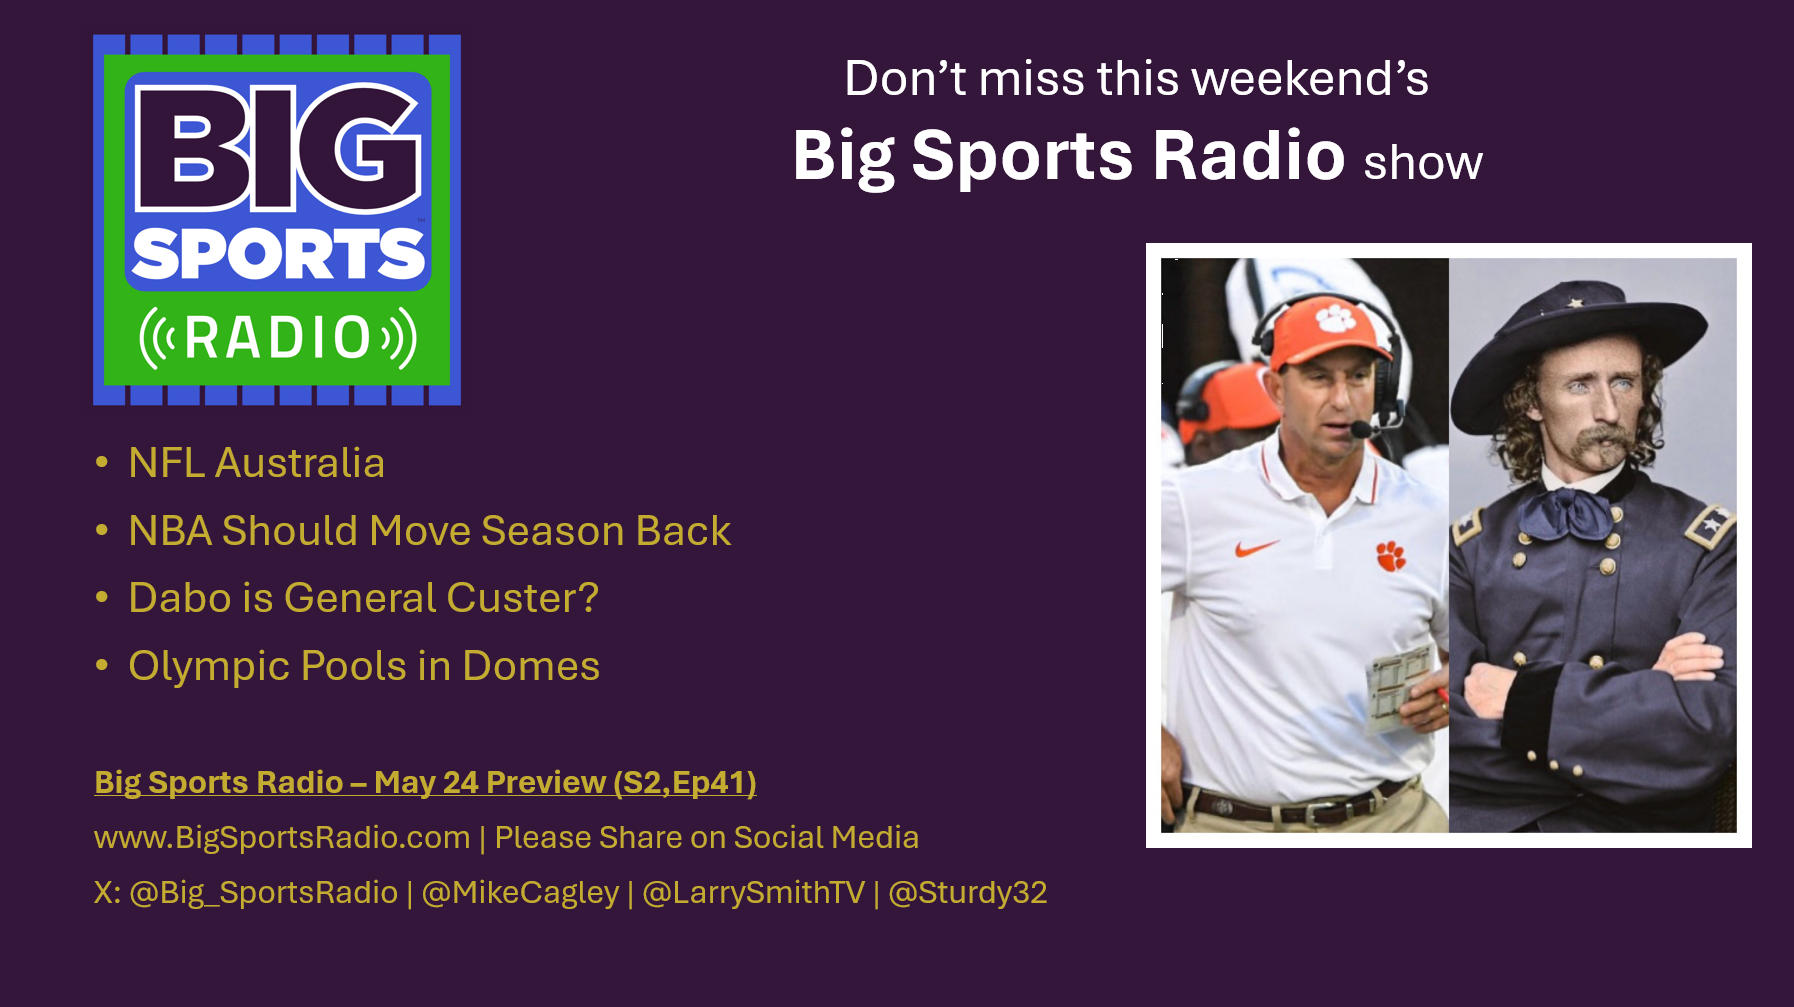 Big Sports Radio - May 24 Preview #2